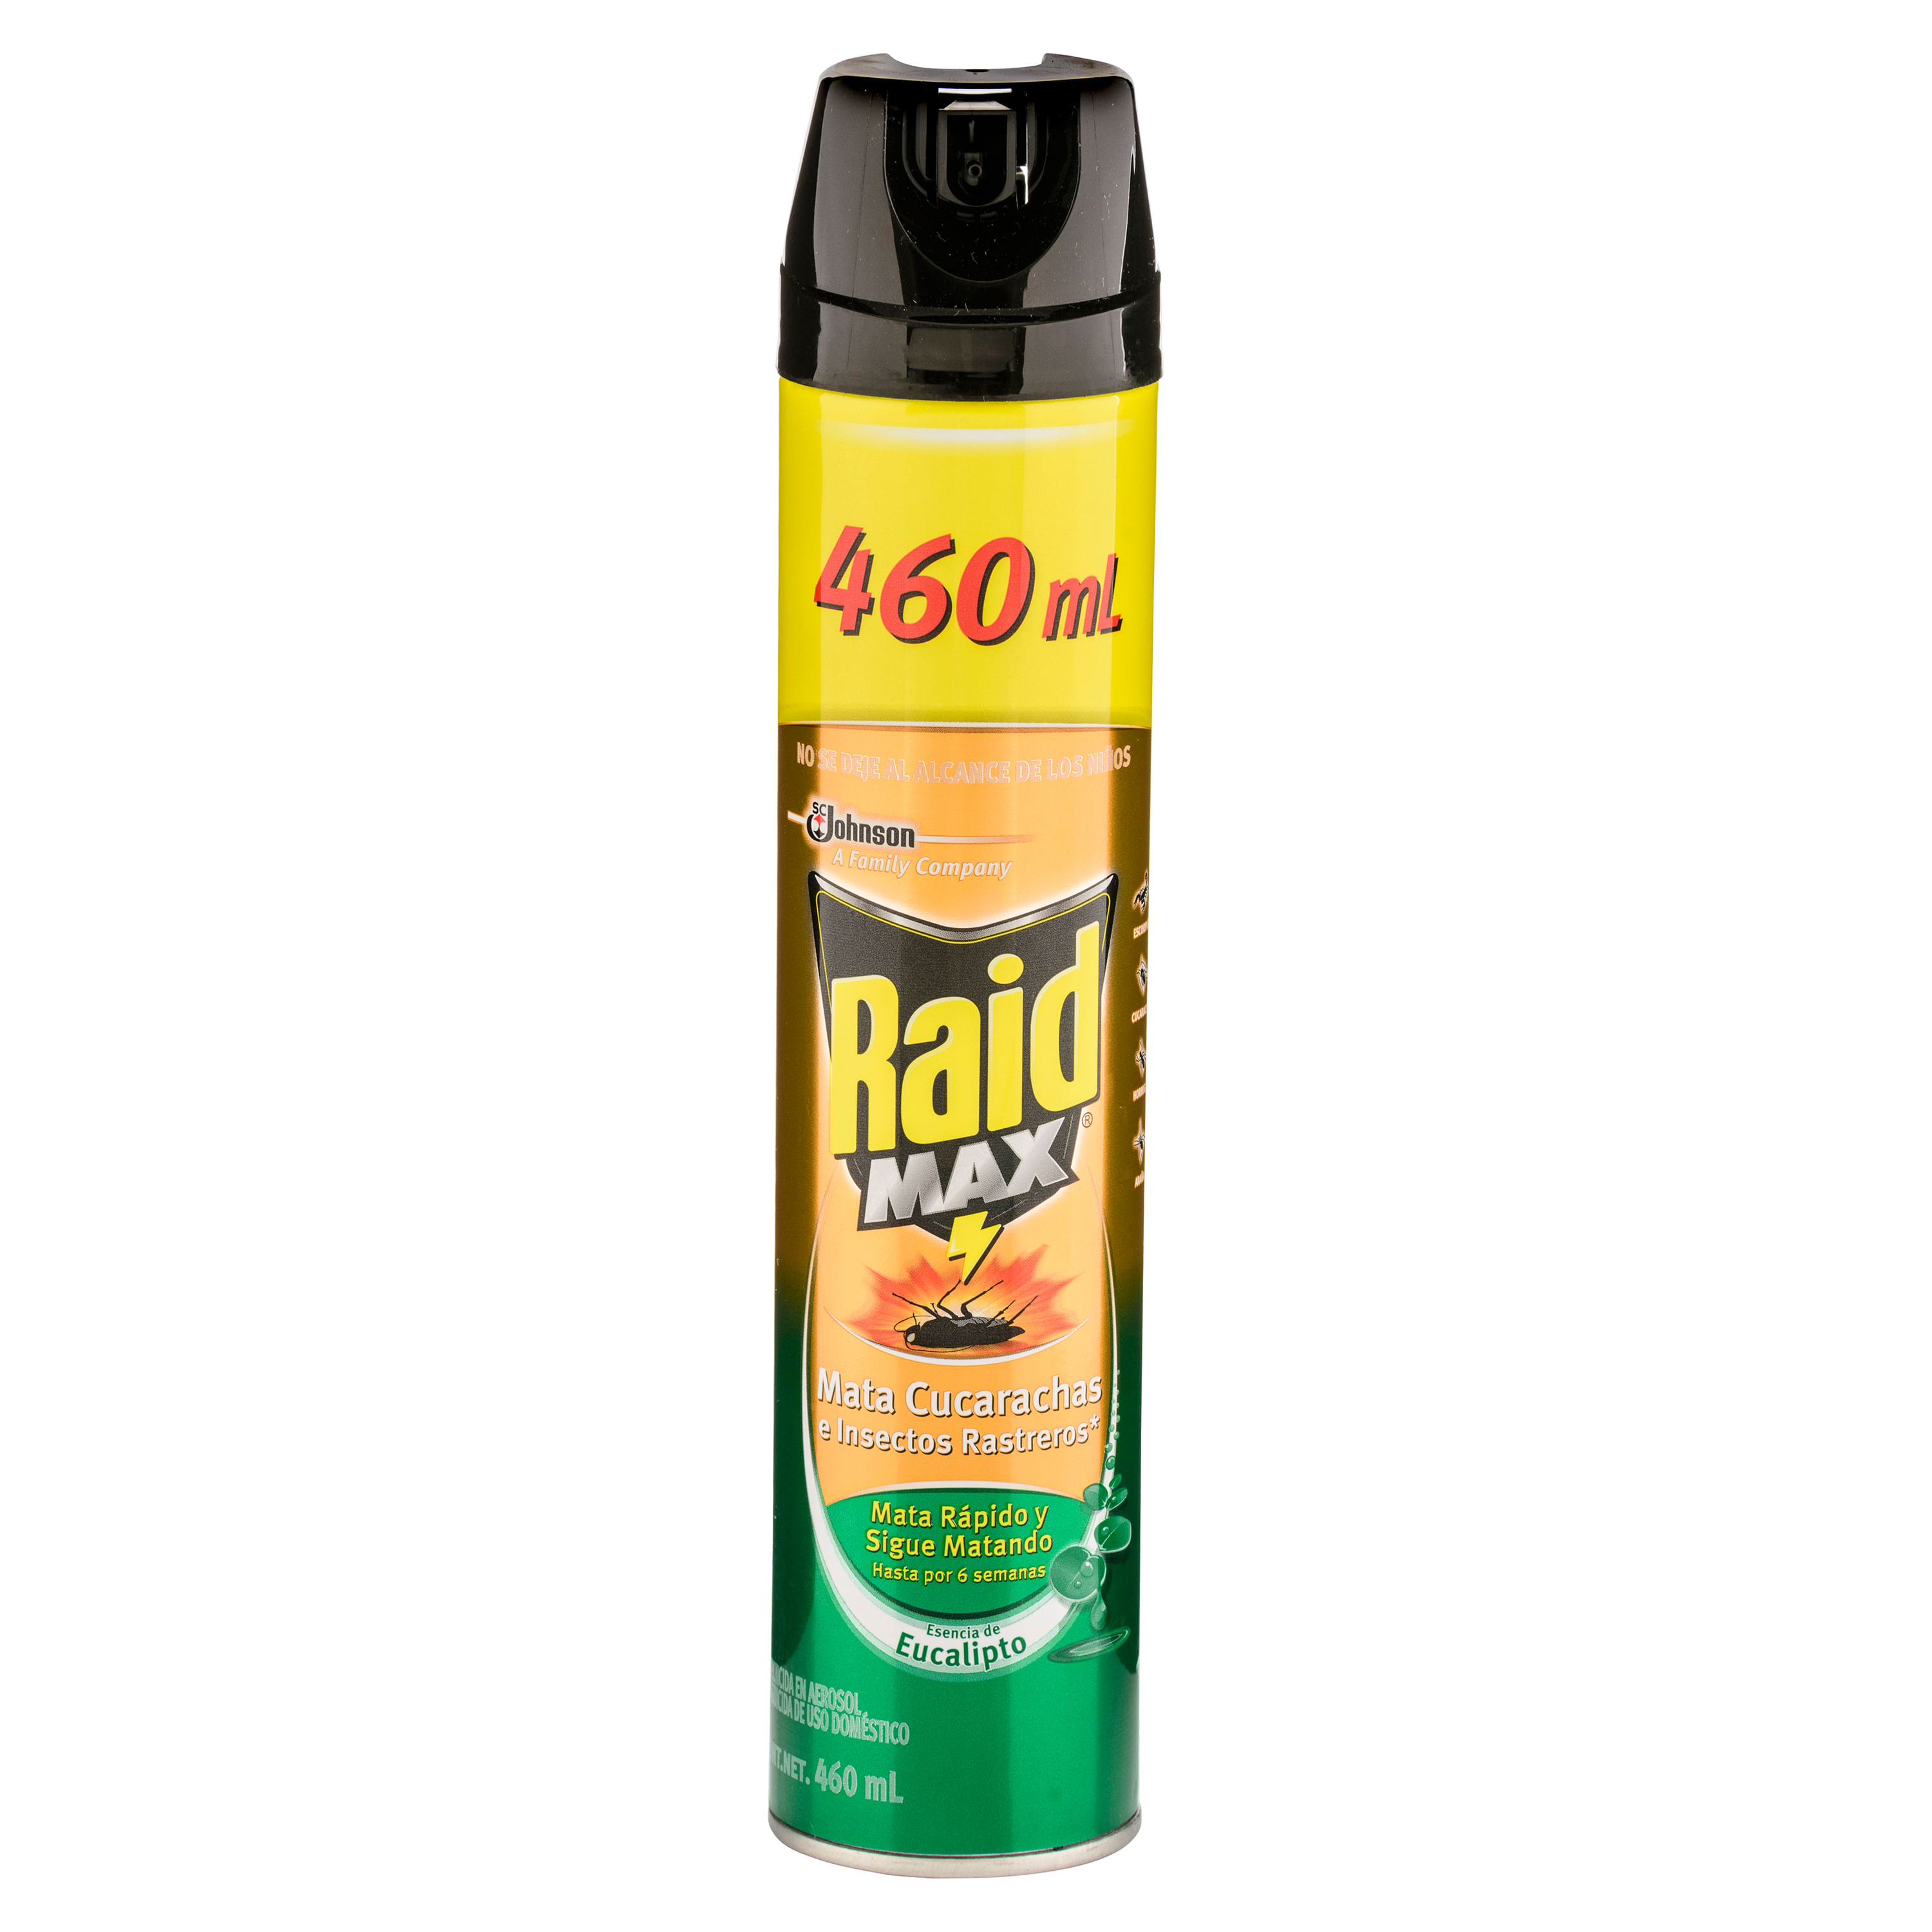 comprar-insecticida-raid-max-eucalipto-460-ml-walmart-guatemala